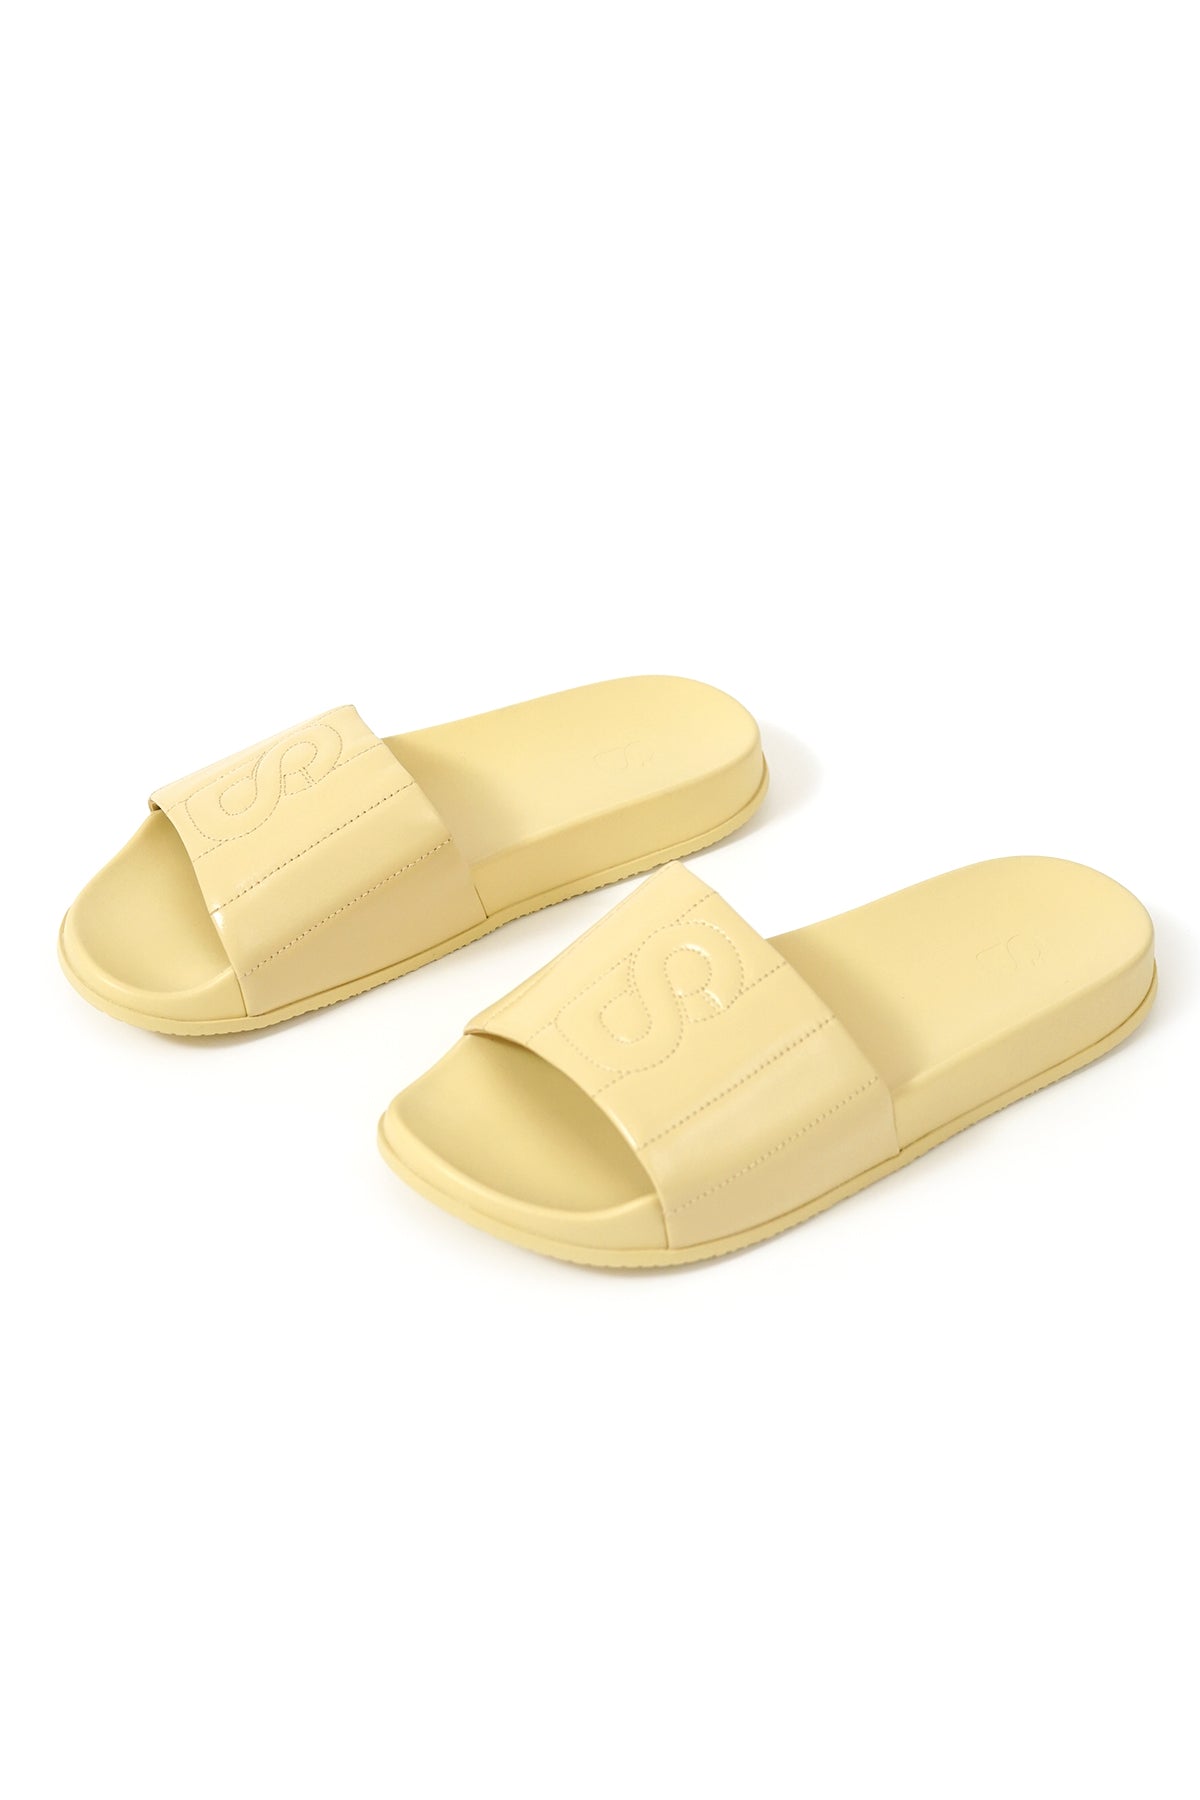 Mera Sandal - Butter Yellow